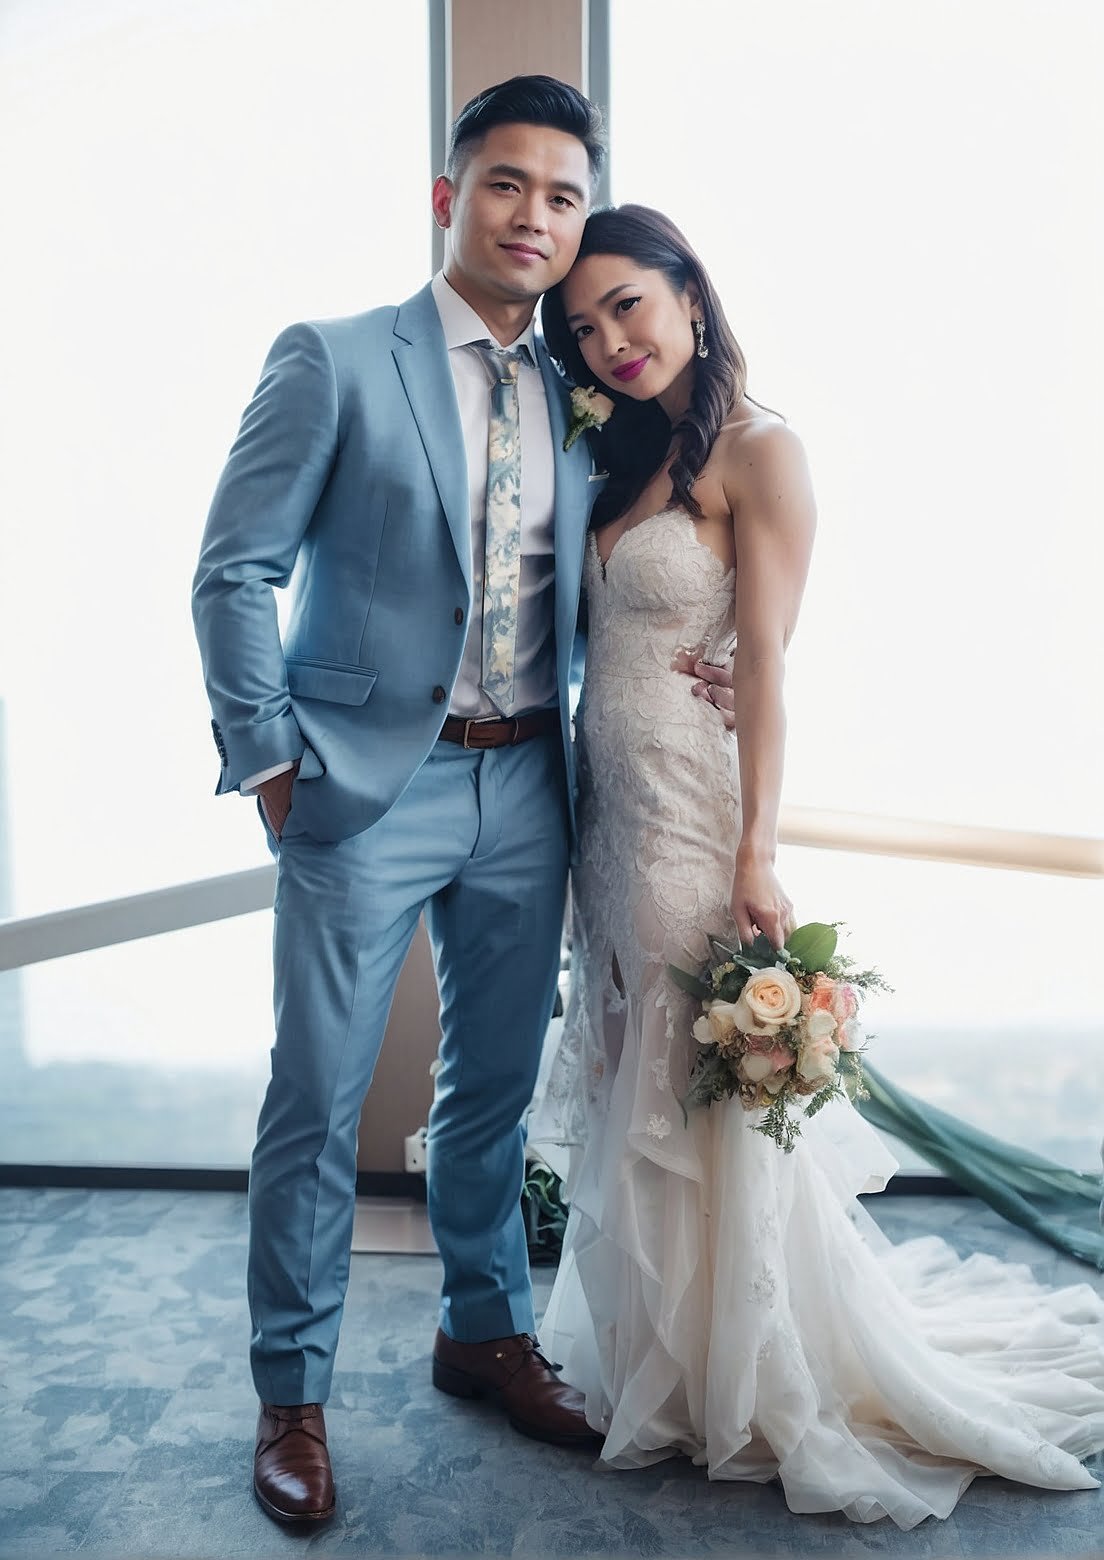 Rooftop Romance: Sky-High Wedding Style